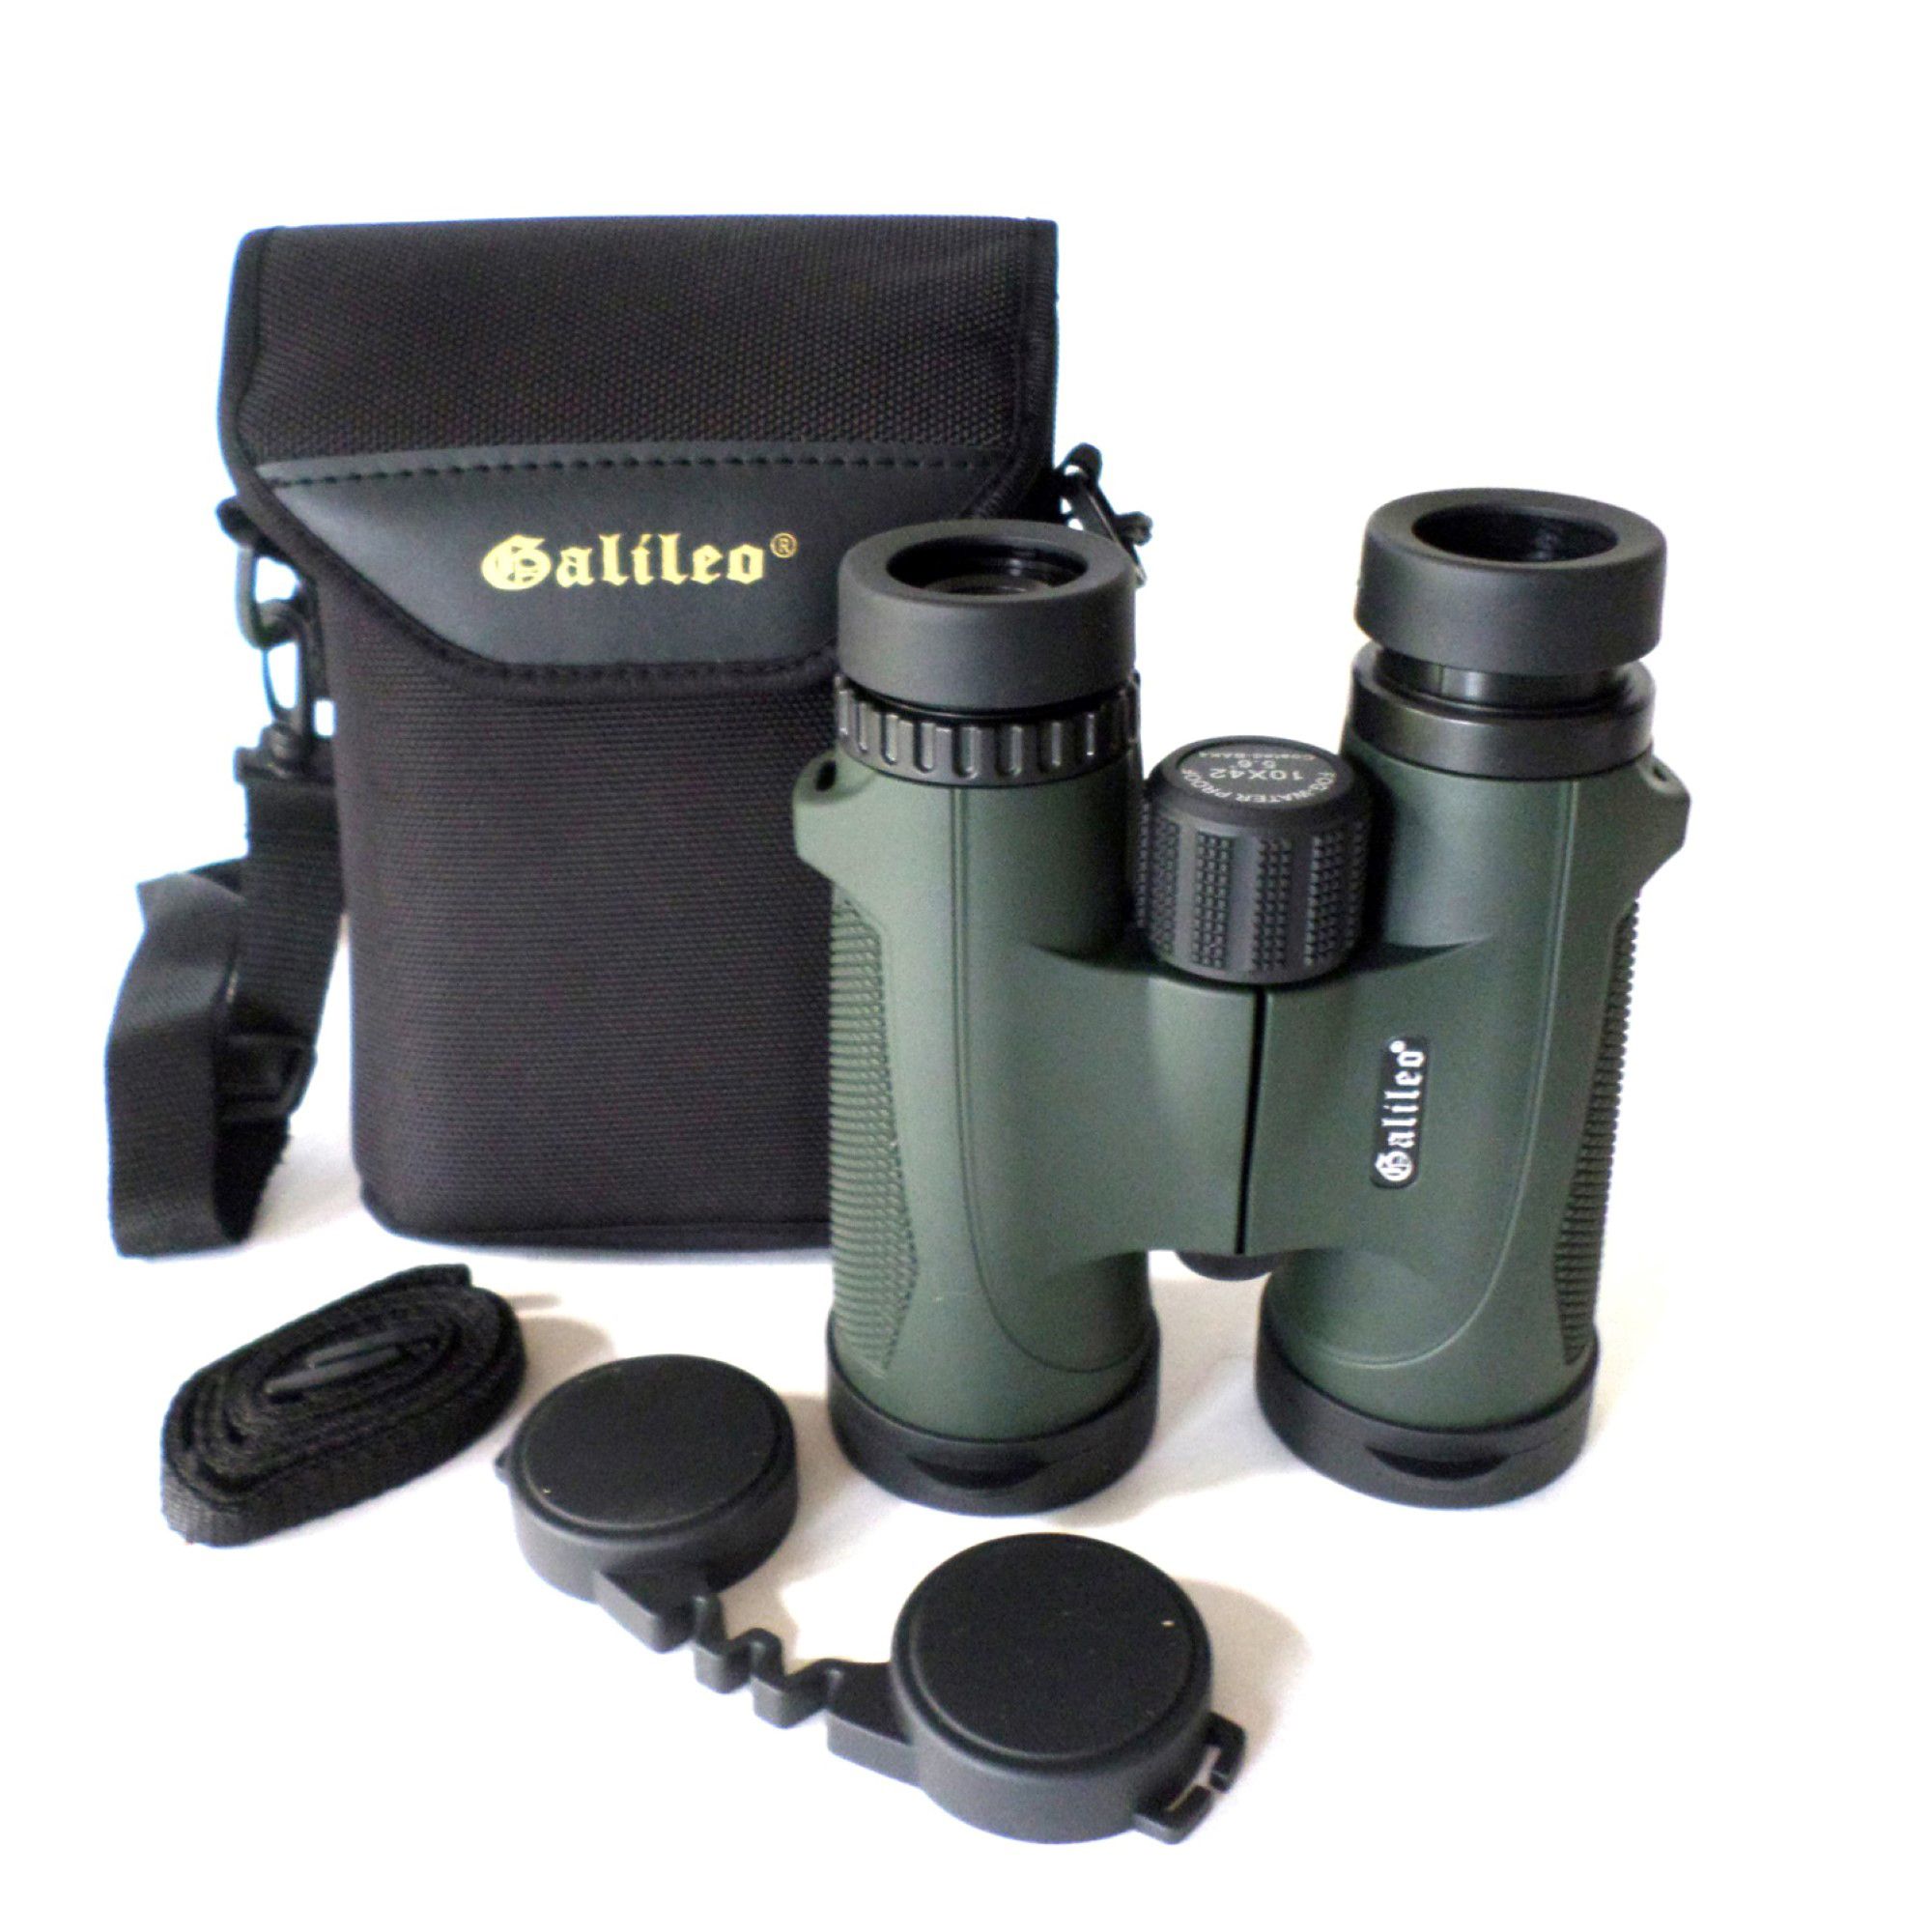 Galileo Smartphone Camera Adapter for Telescope and Binocular